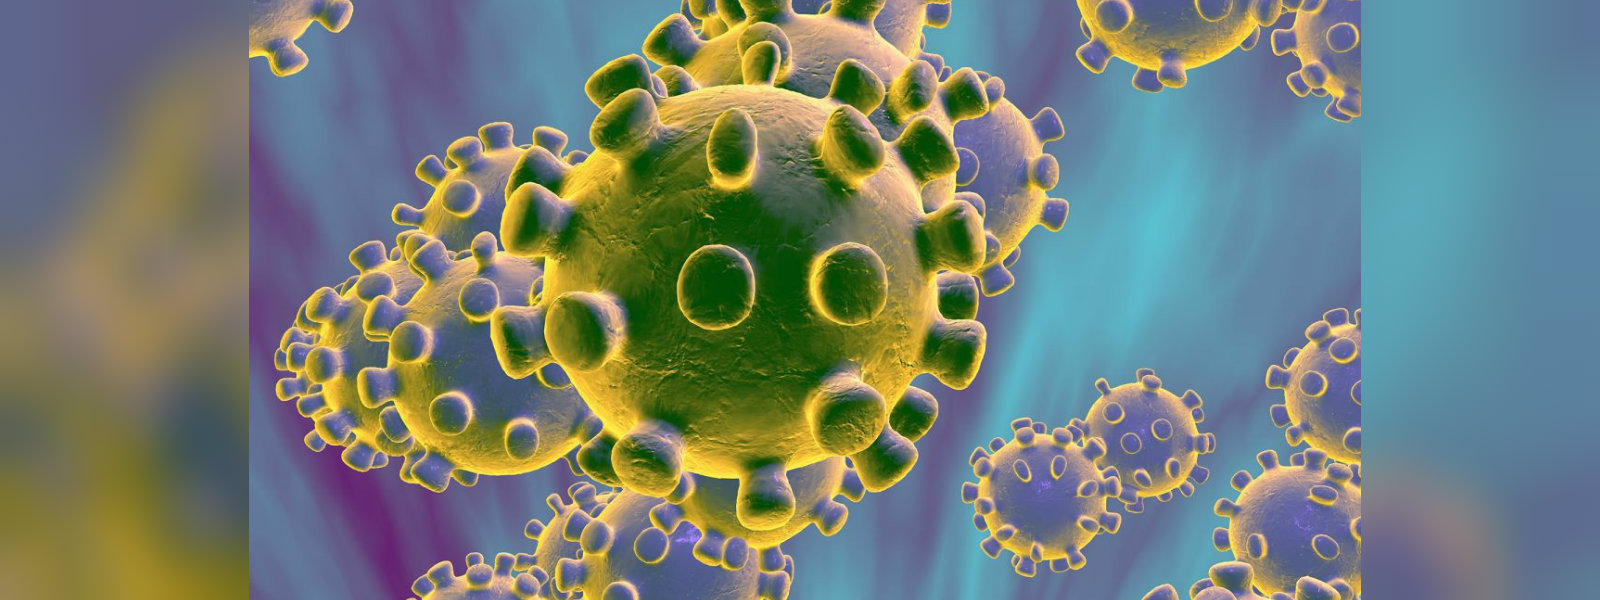 10 suspected Coronavirus patients currently hospitalised